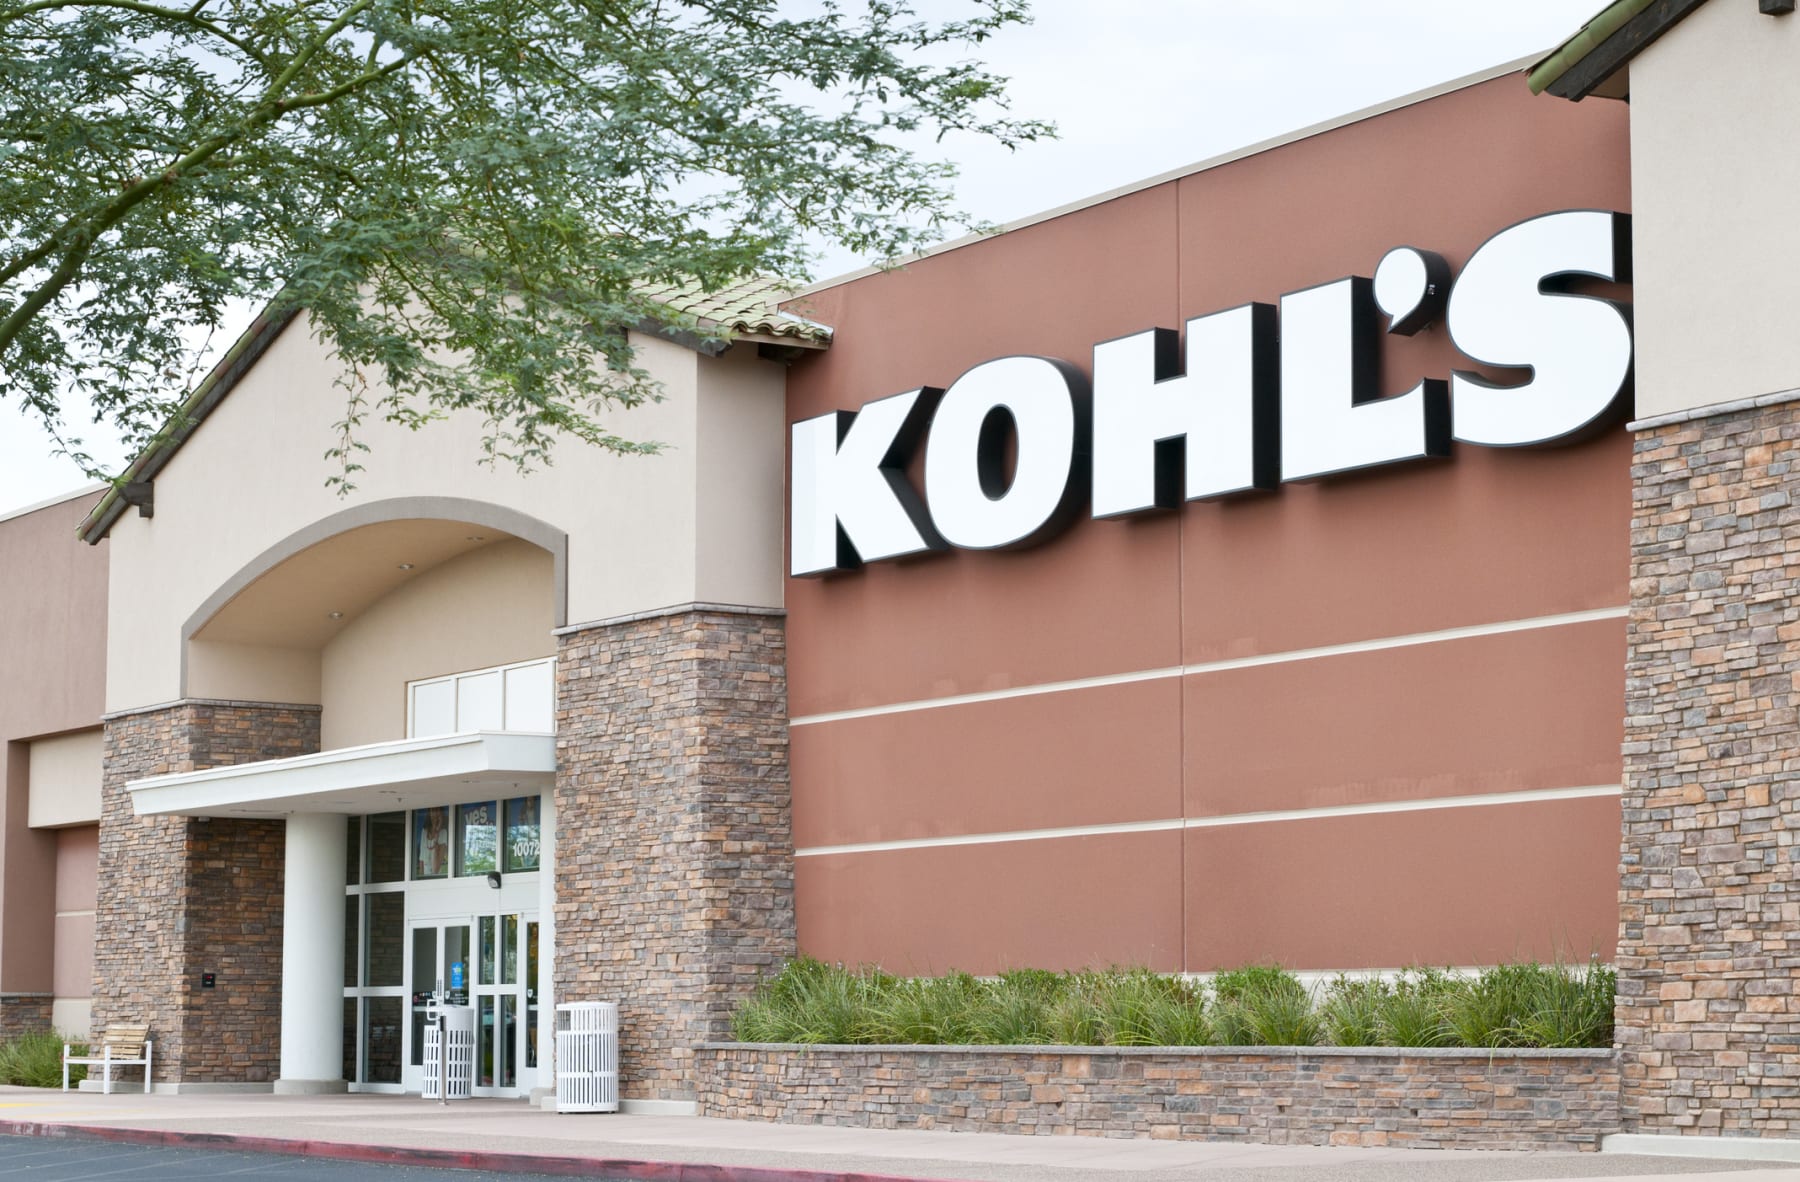 Kohl's Black Friday Deals: Best 2023 Savings Live